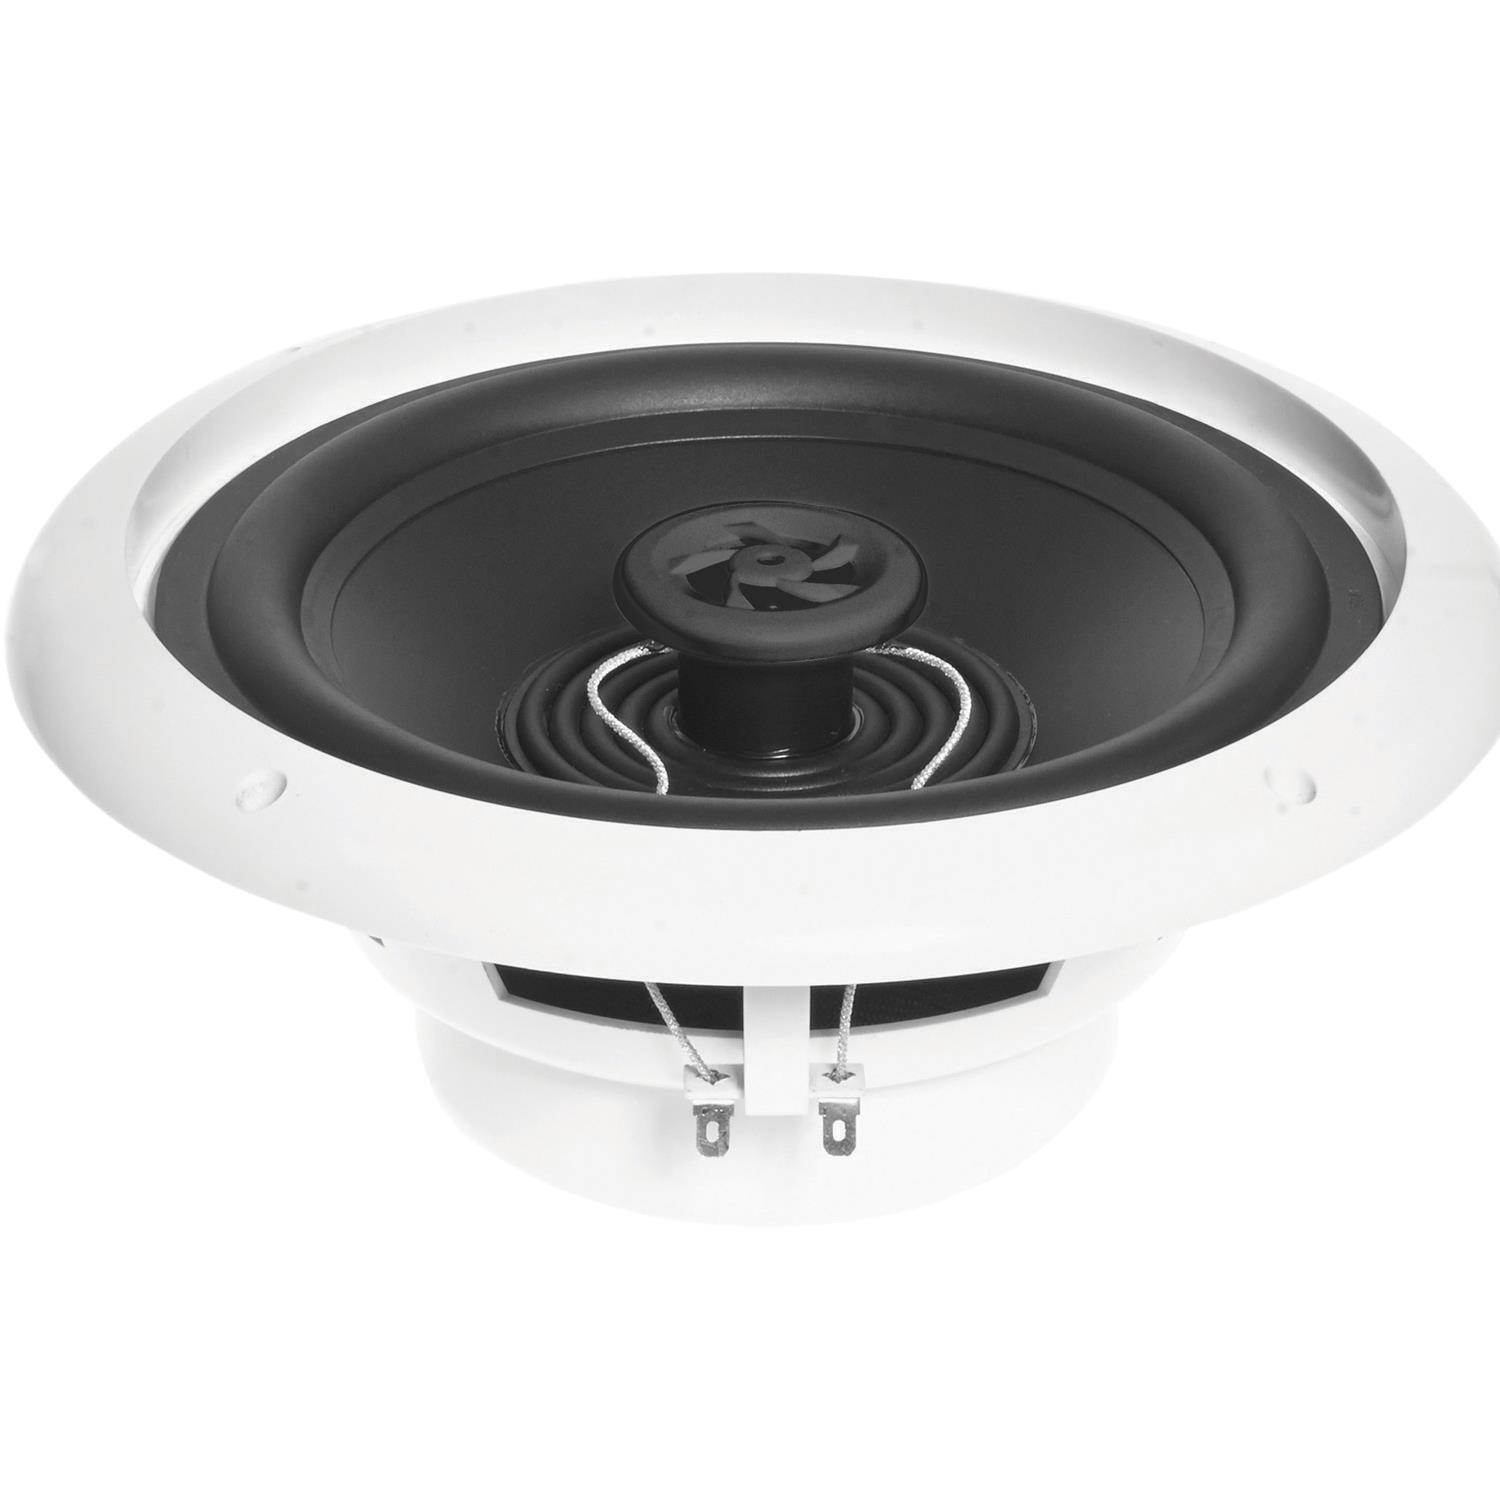 e-audio 80w Wireless Bluetooth Home Bathroom Moisture Resistant Ceiling Speaker Kit - DY Pro Audio